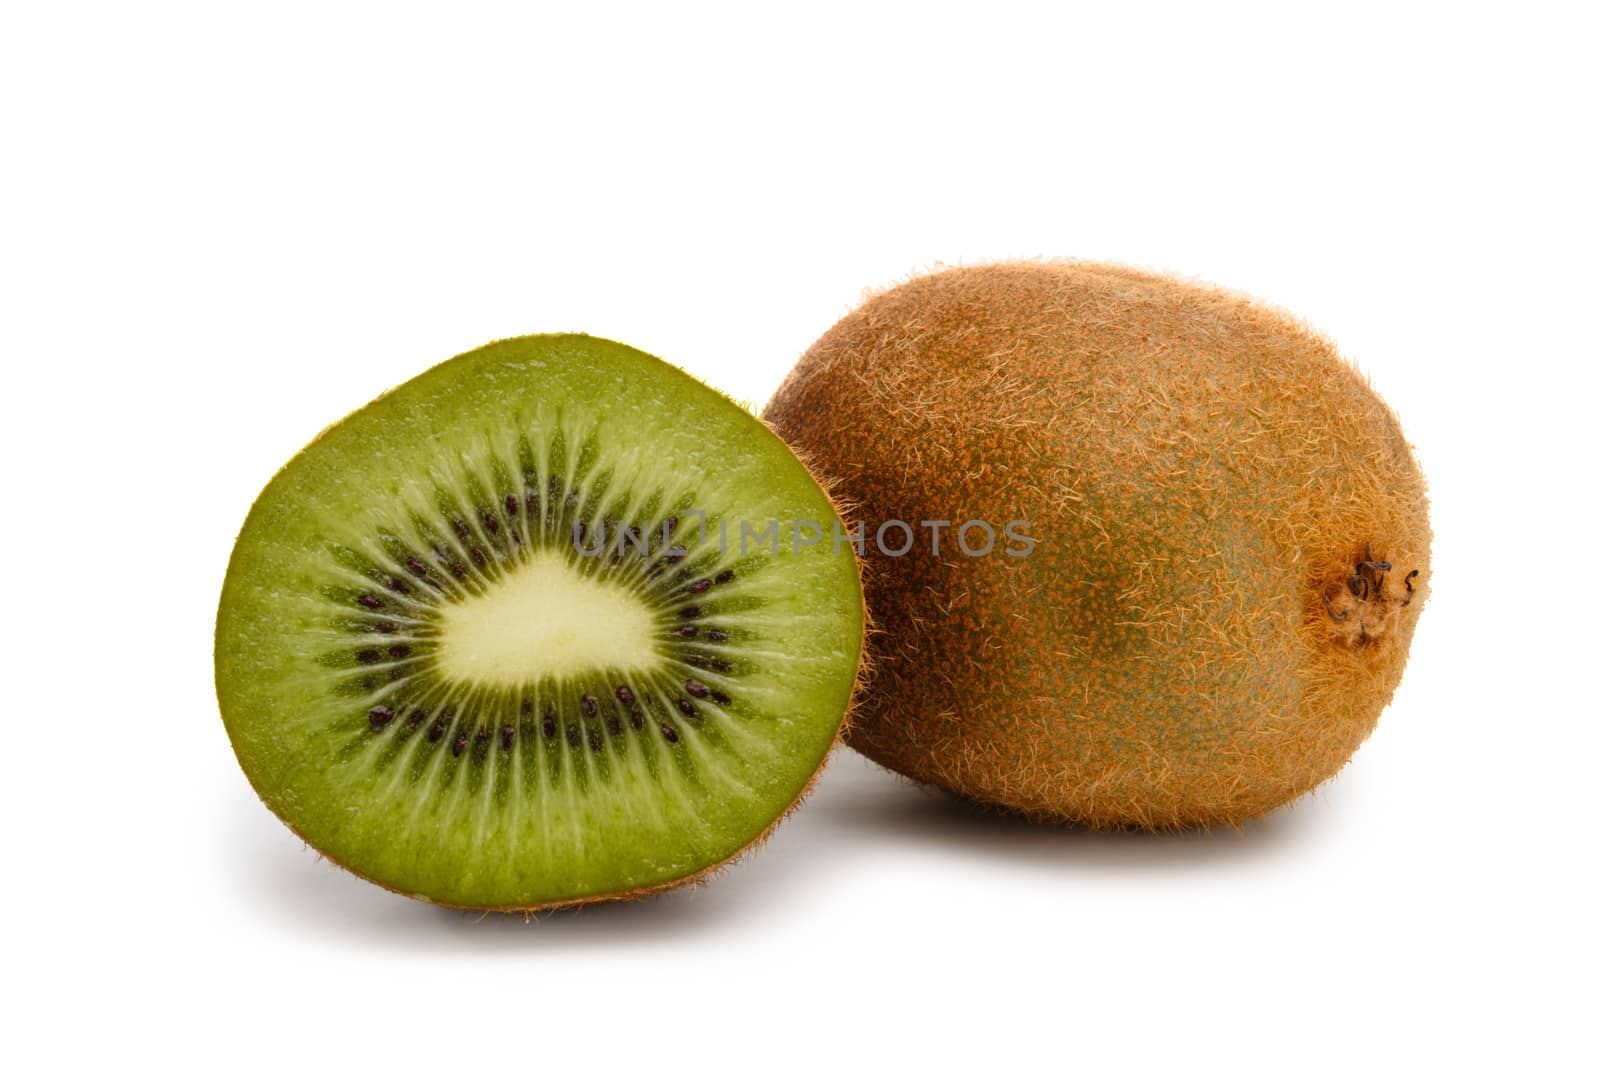 Kiwi fruit by Vagengeym